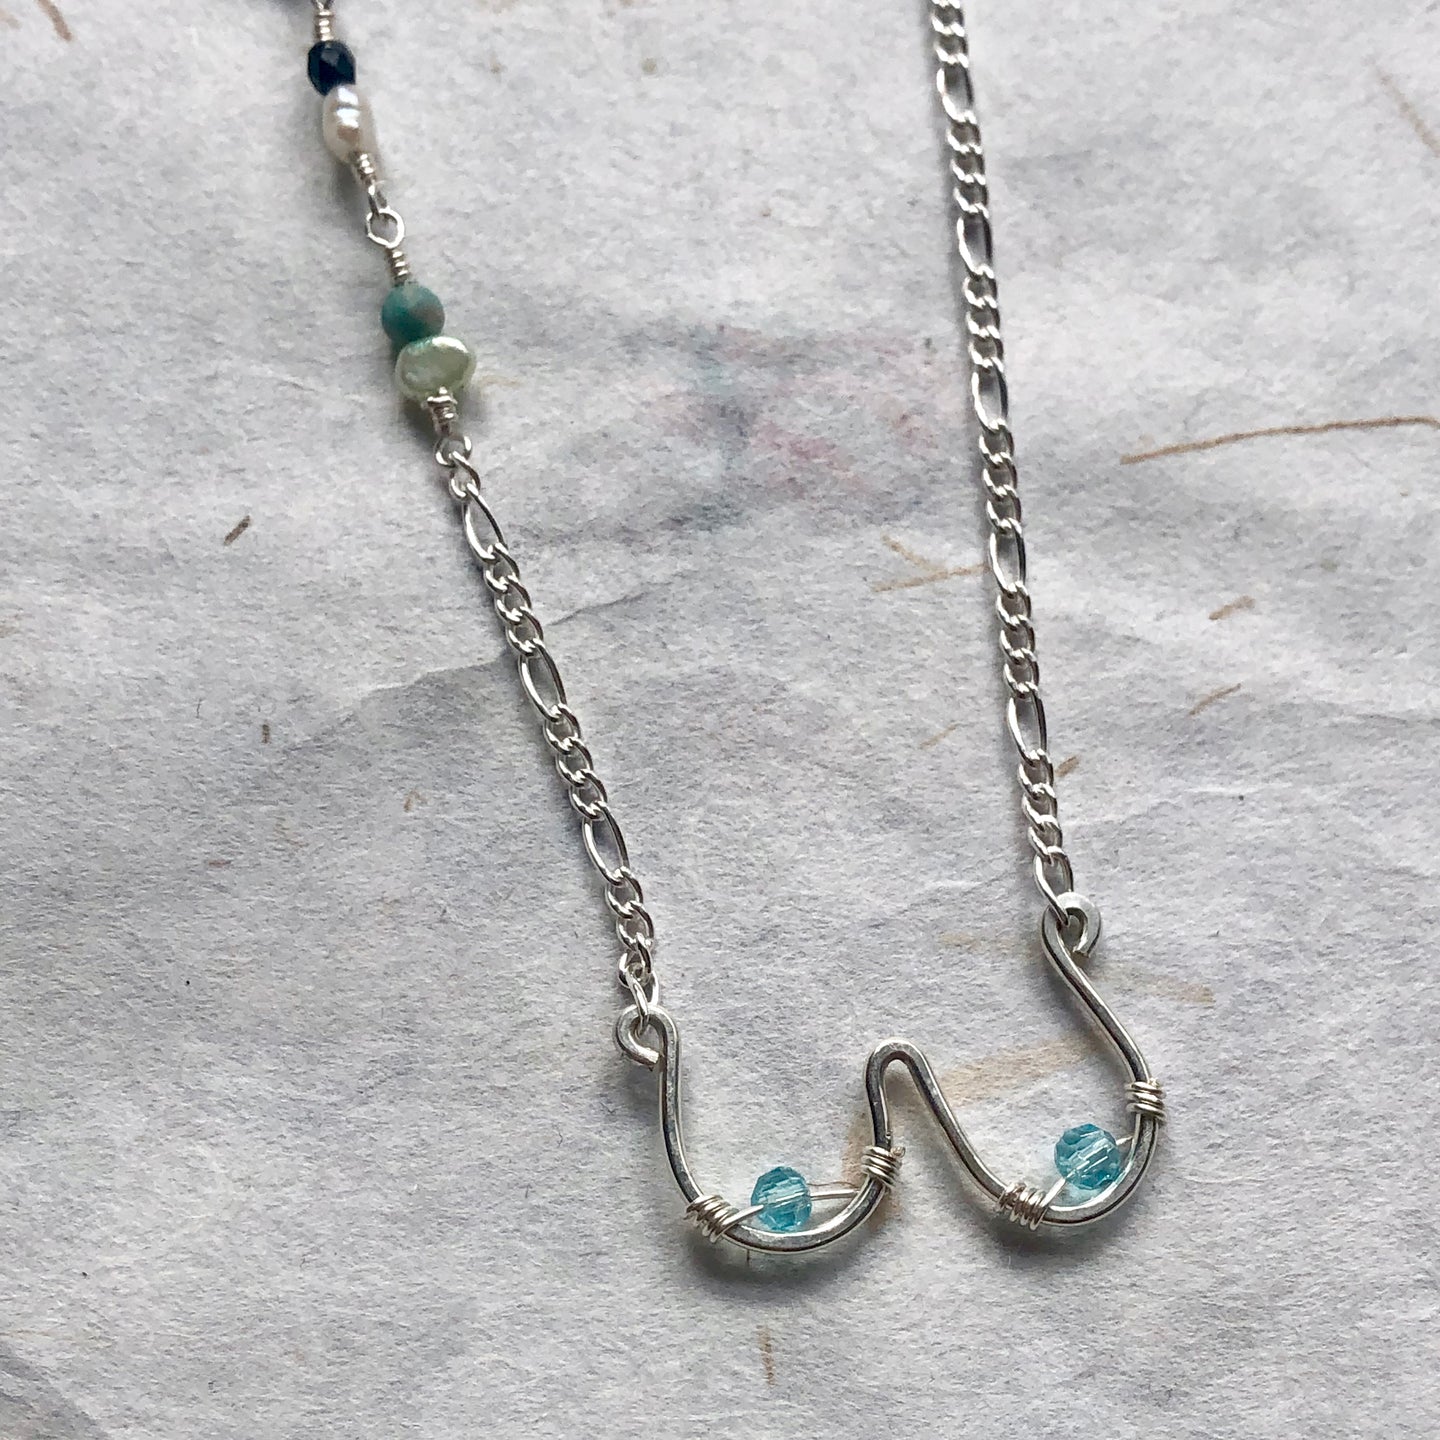 'Femme' halskæde Ltd i sølv med lyseblå perler